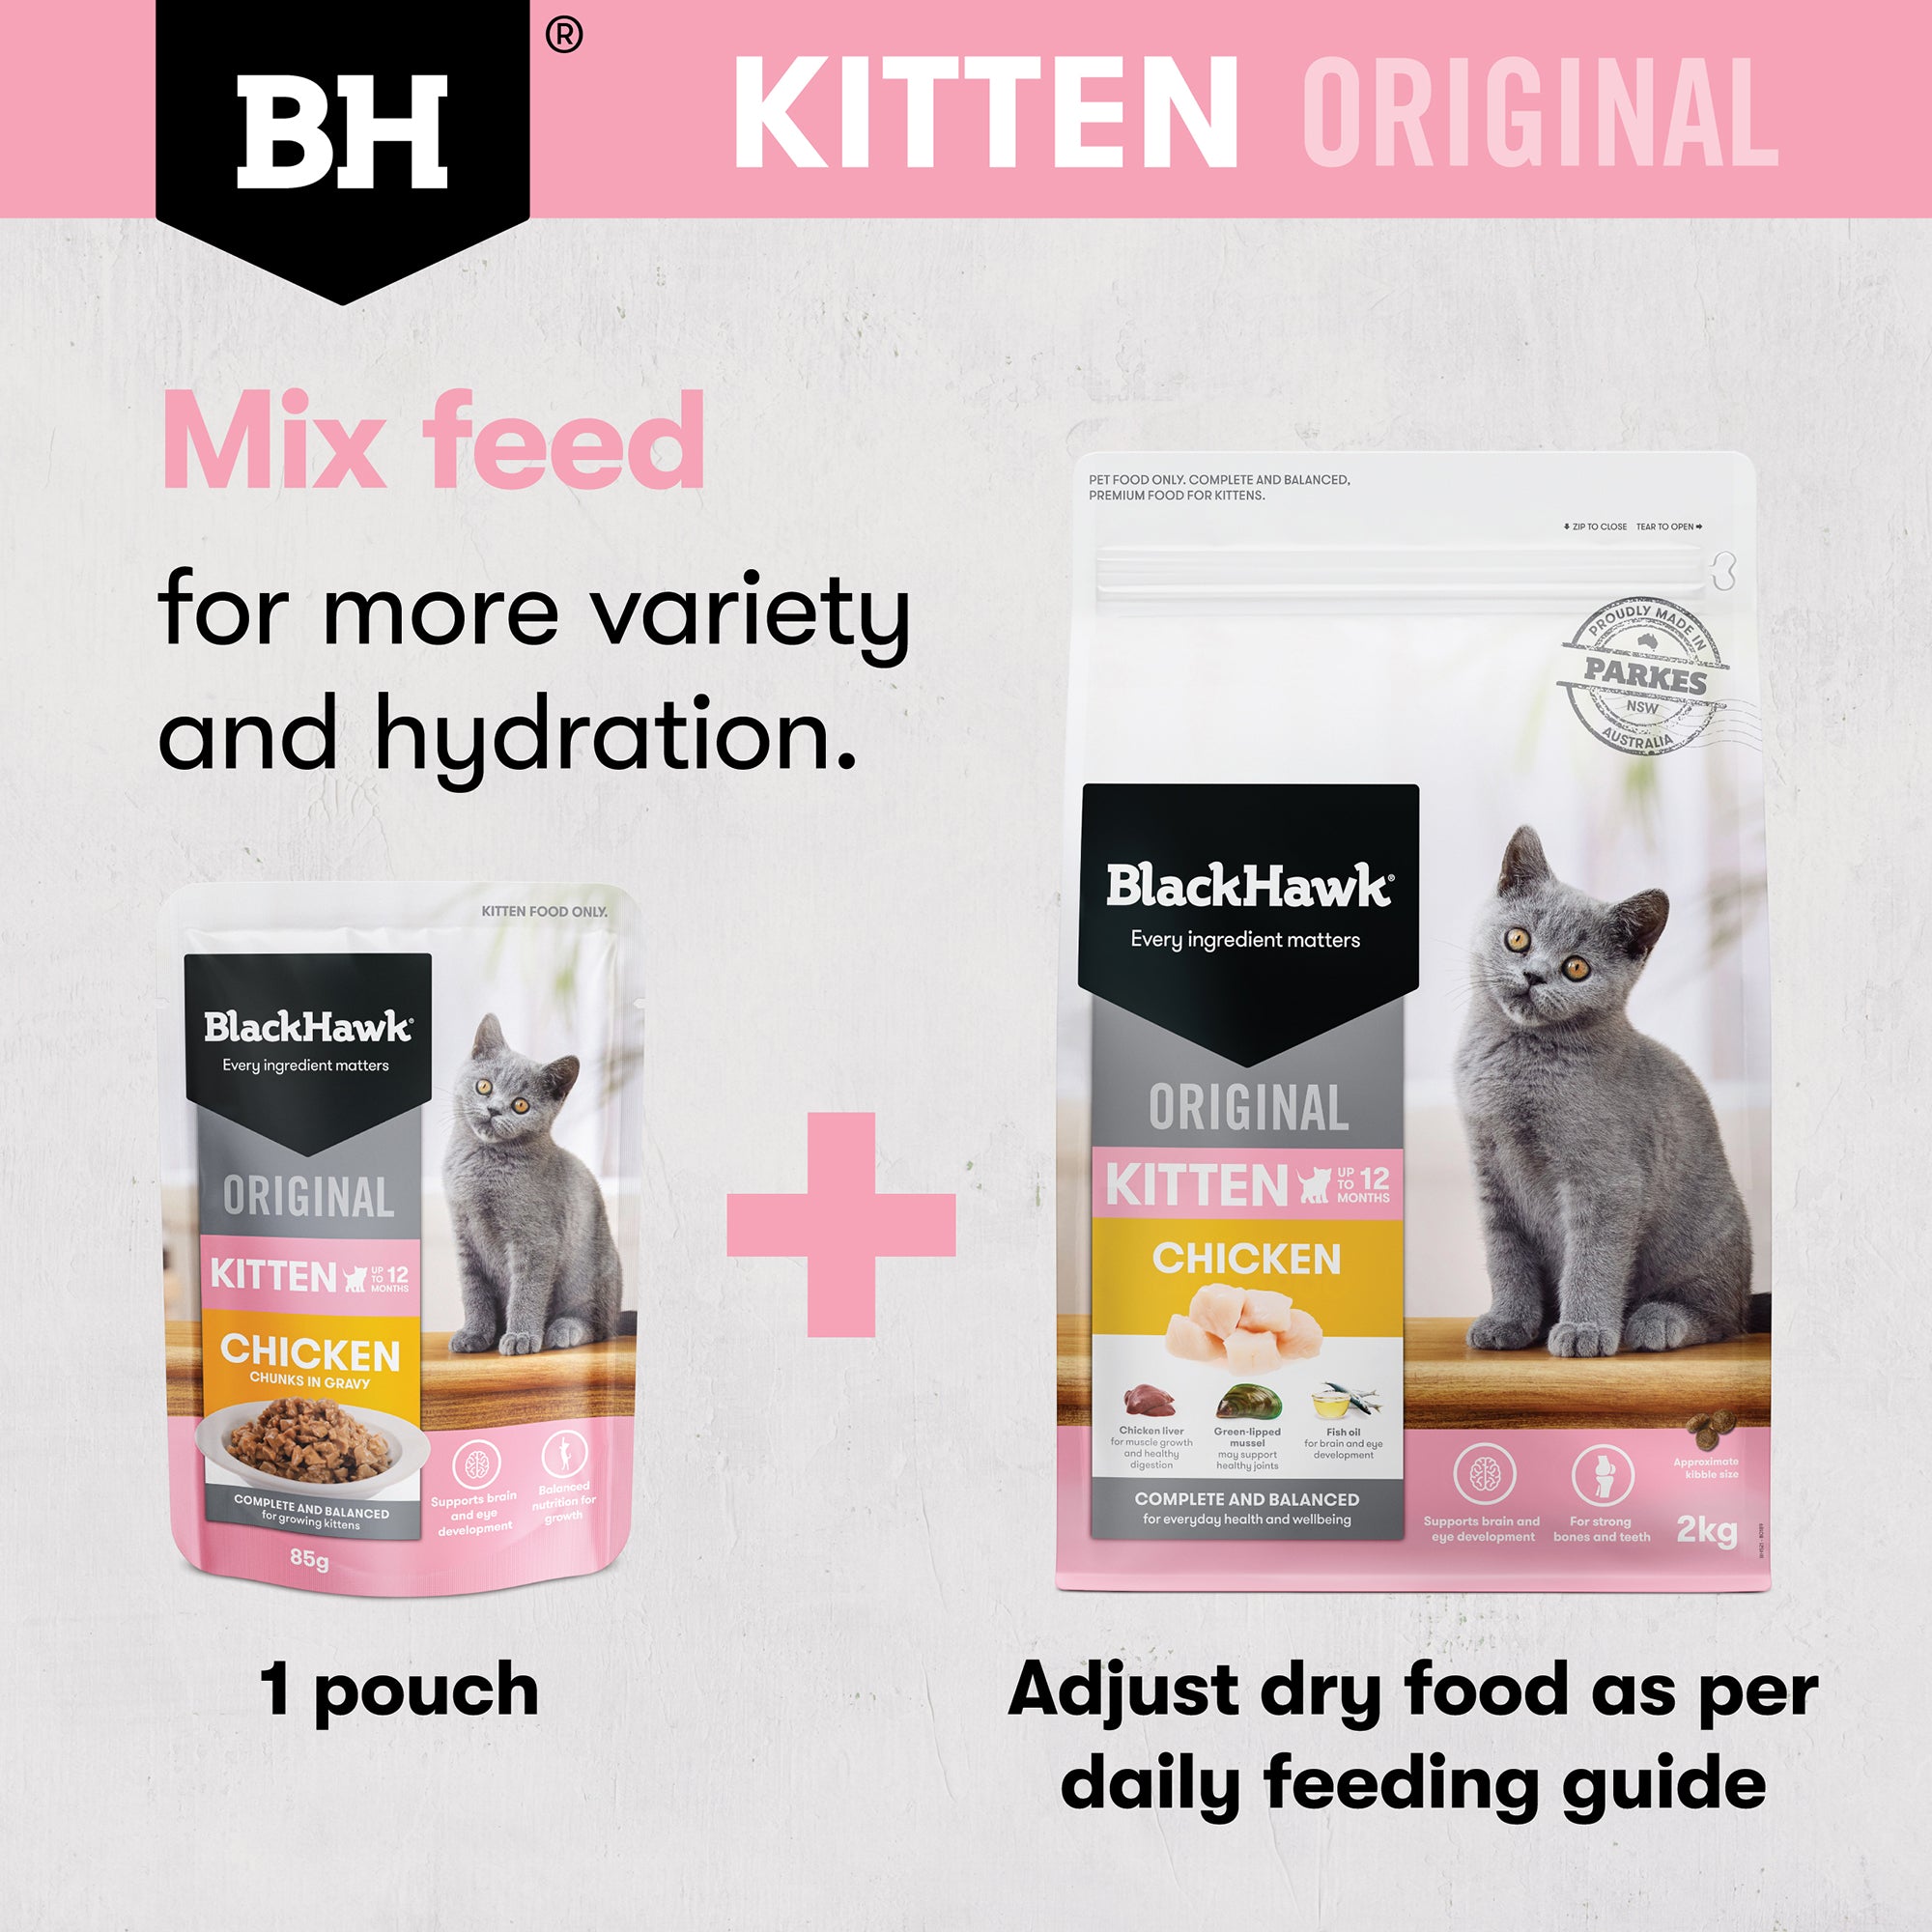 Black Hawk Original Kitten Chicken Dry Cat Food 4kg